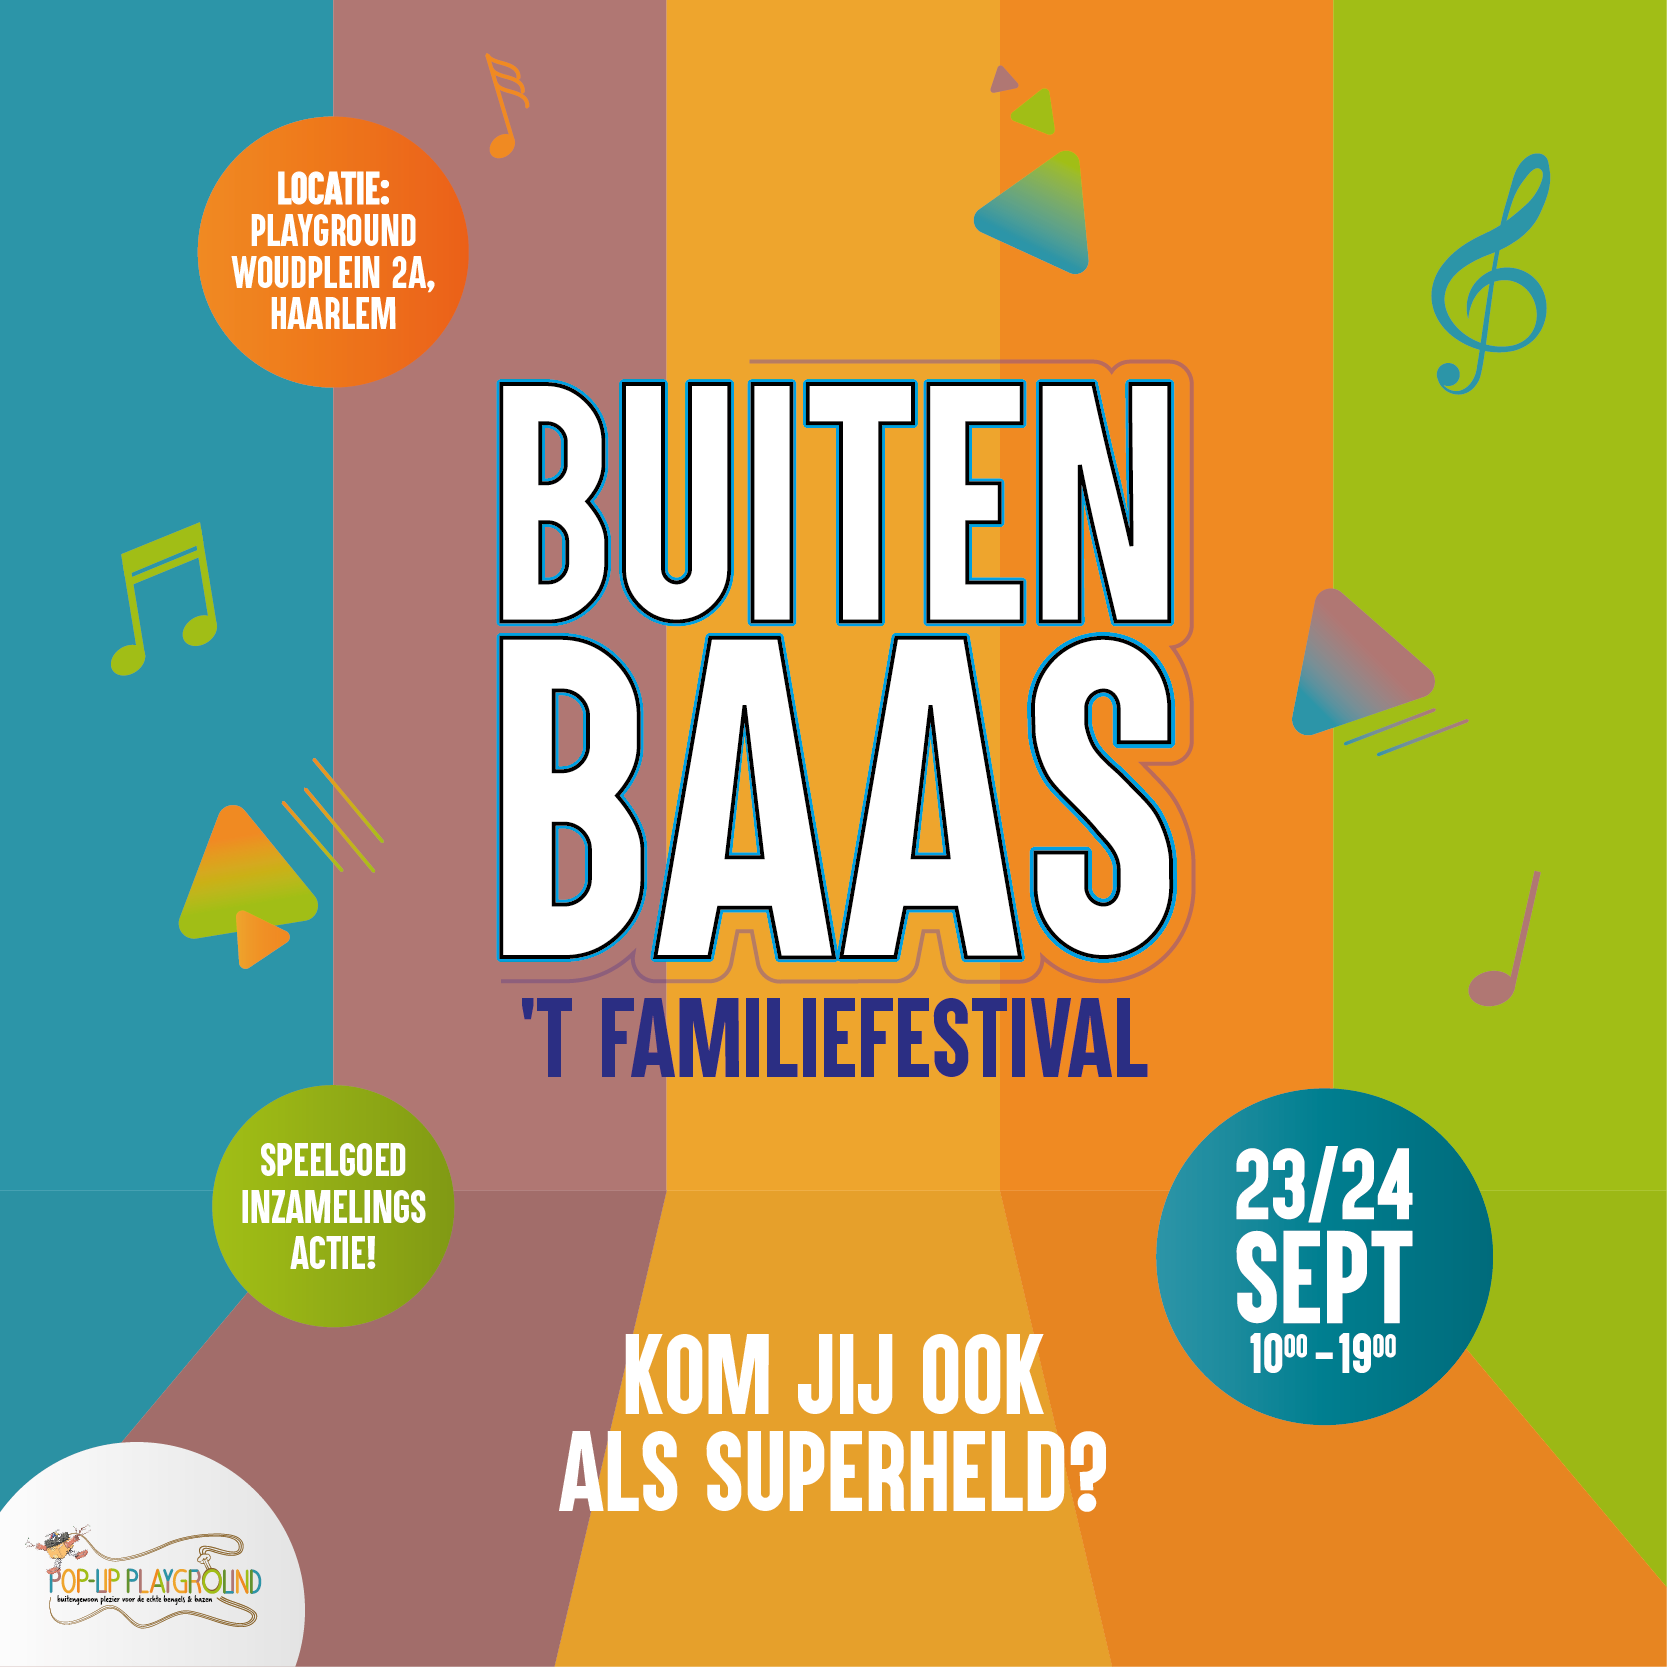 BuitenBaas ‘t Familiefestival